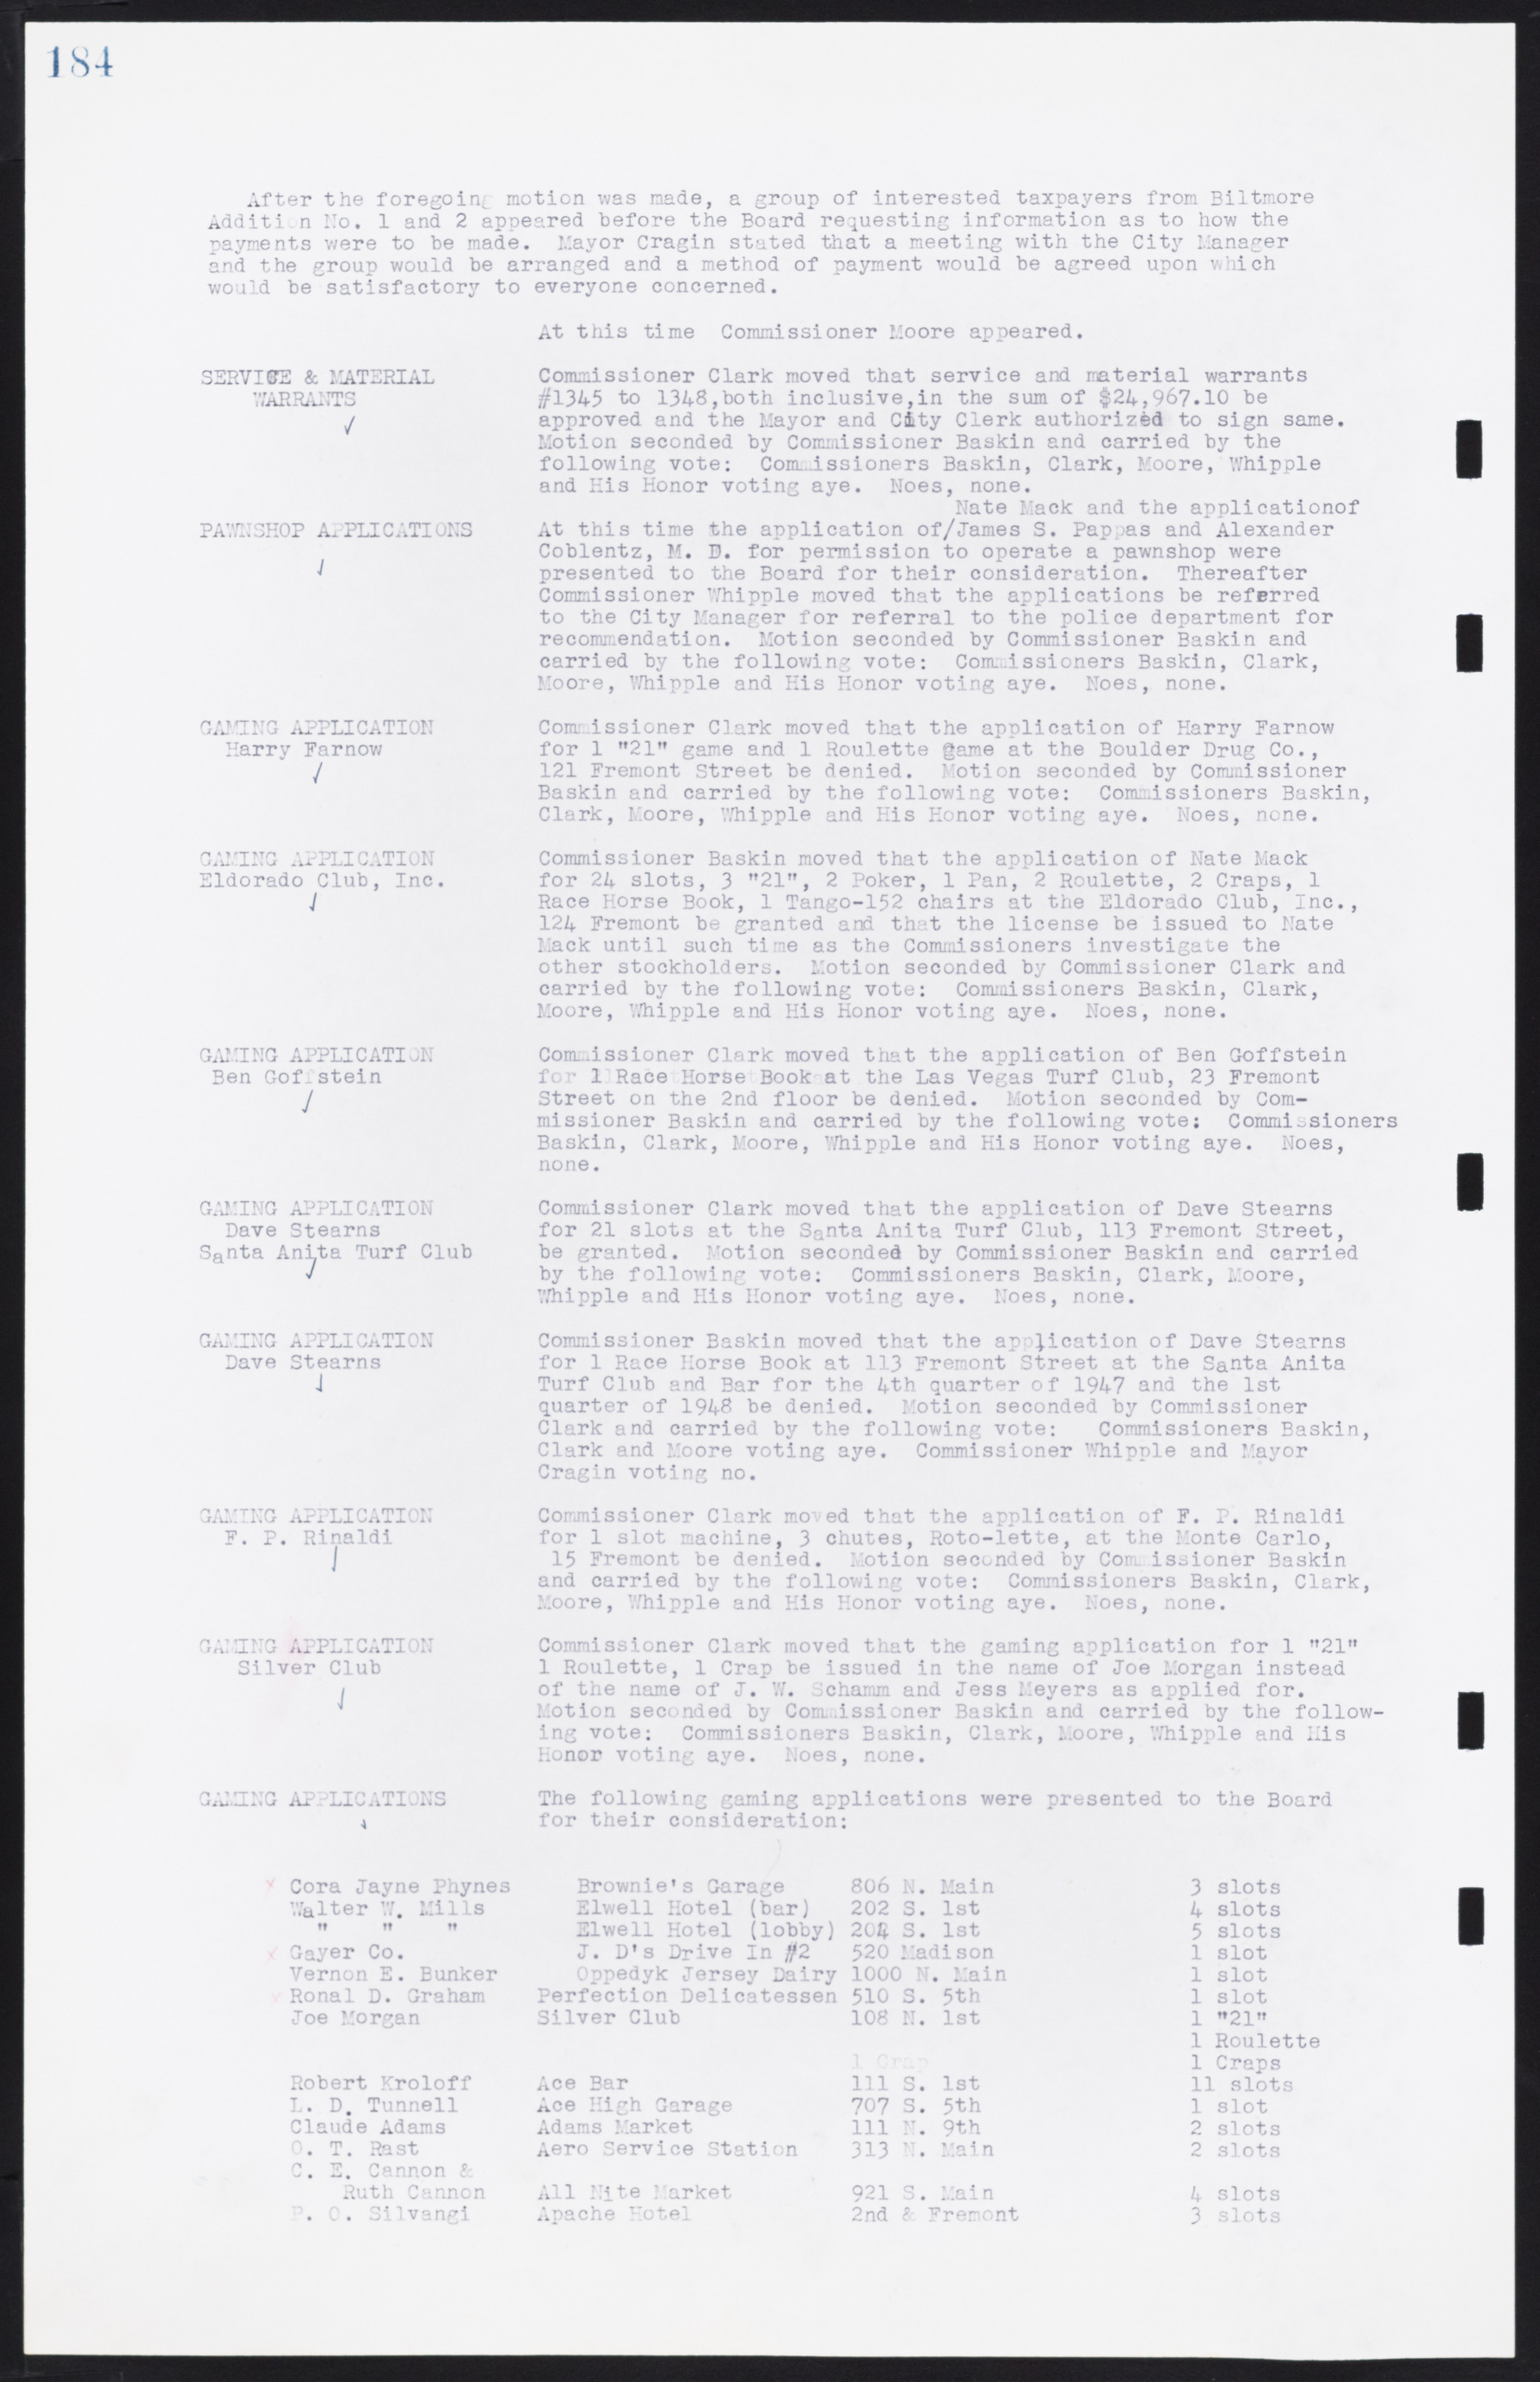 Las Vegas City Commission Minutes, January 7, 1947 to October 26, 1949, lvc000006-204